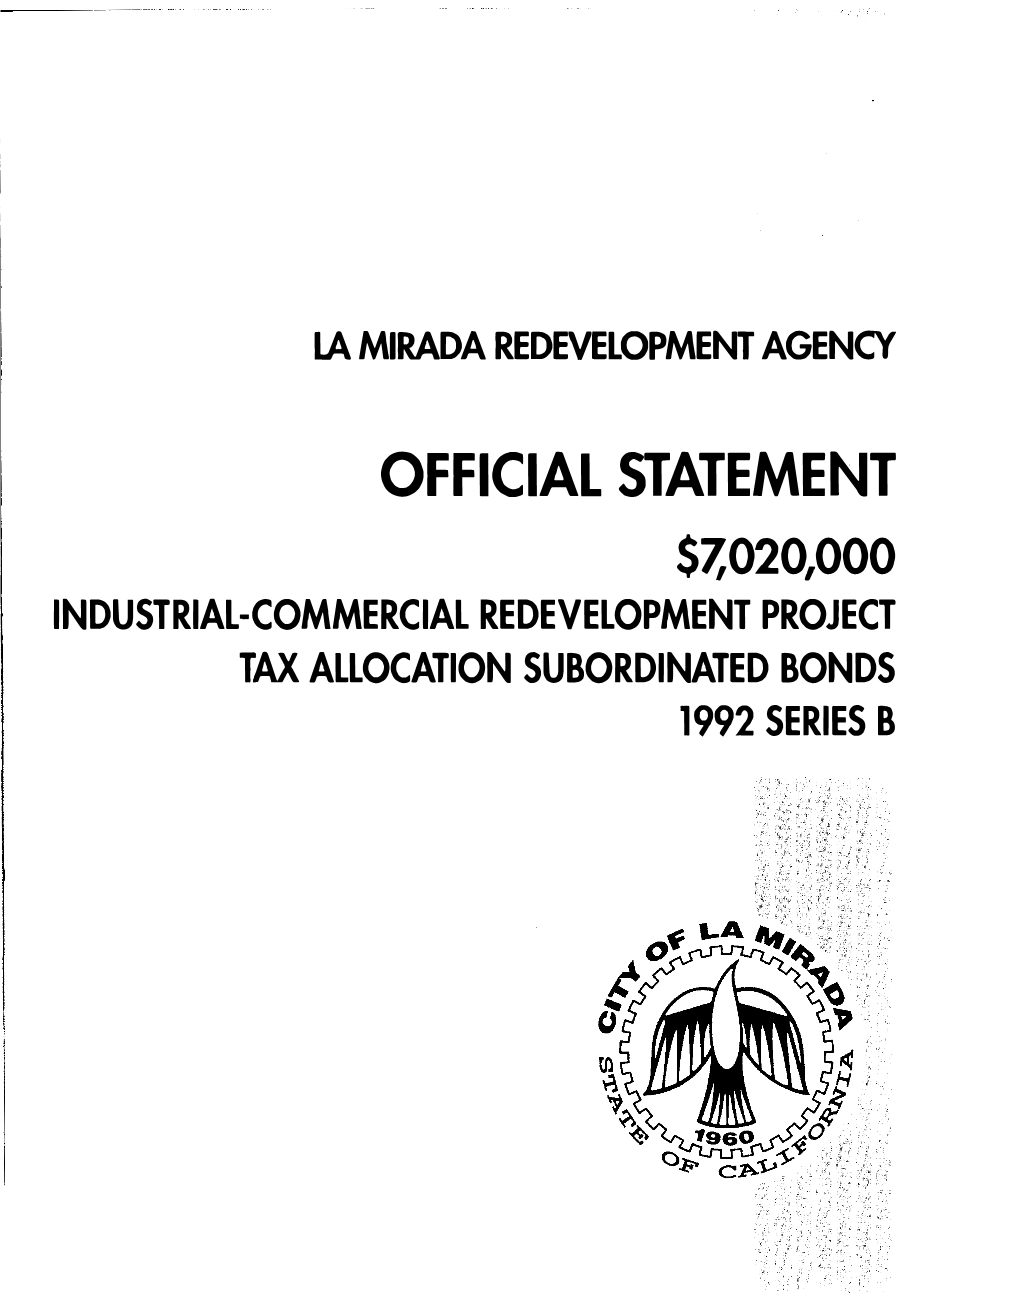 La Mirada Redevelopment Agency La Mirada, California $7,020,000 Industrial-Commercial Redevelopment Project Tax Allocation Subordinated Bonds, 1992 Series B